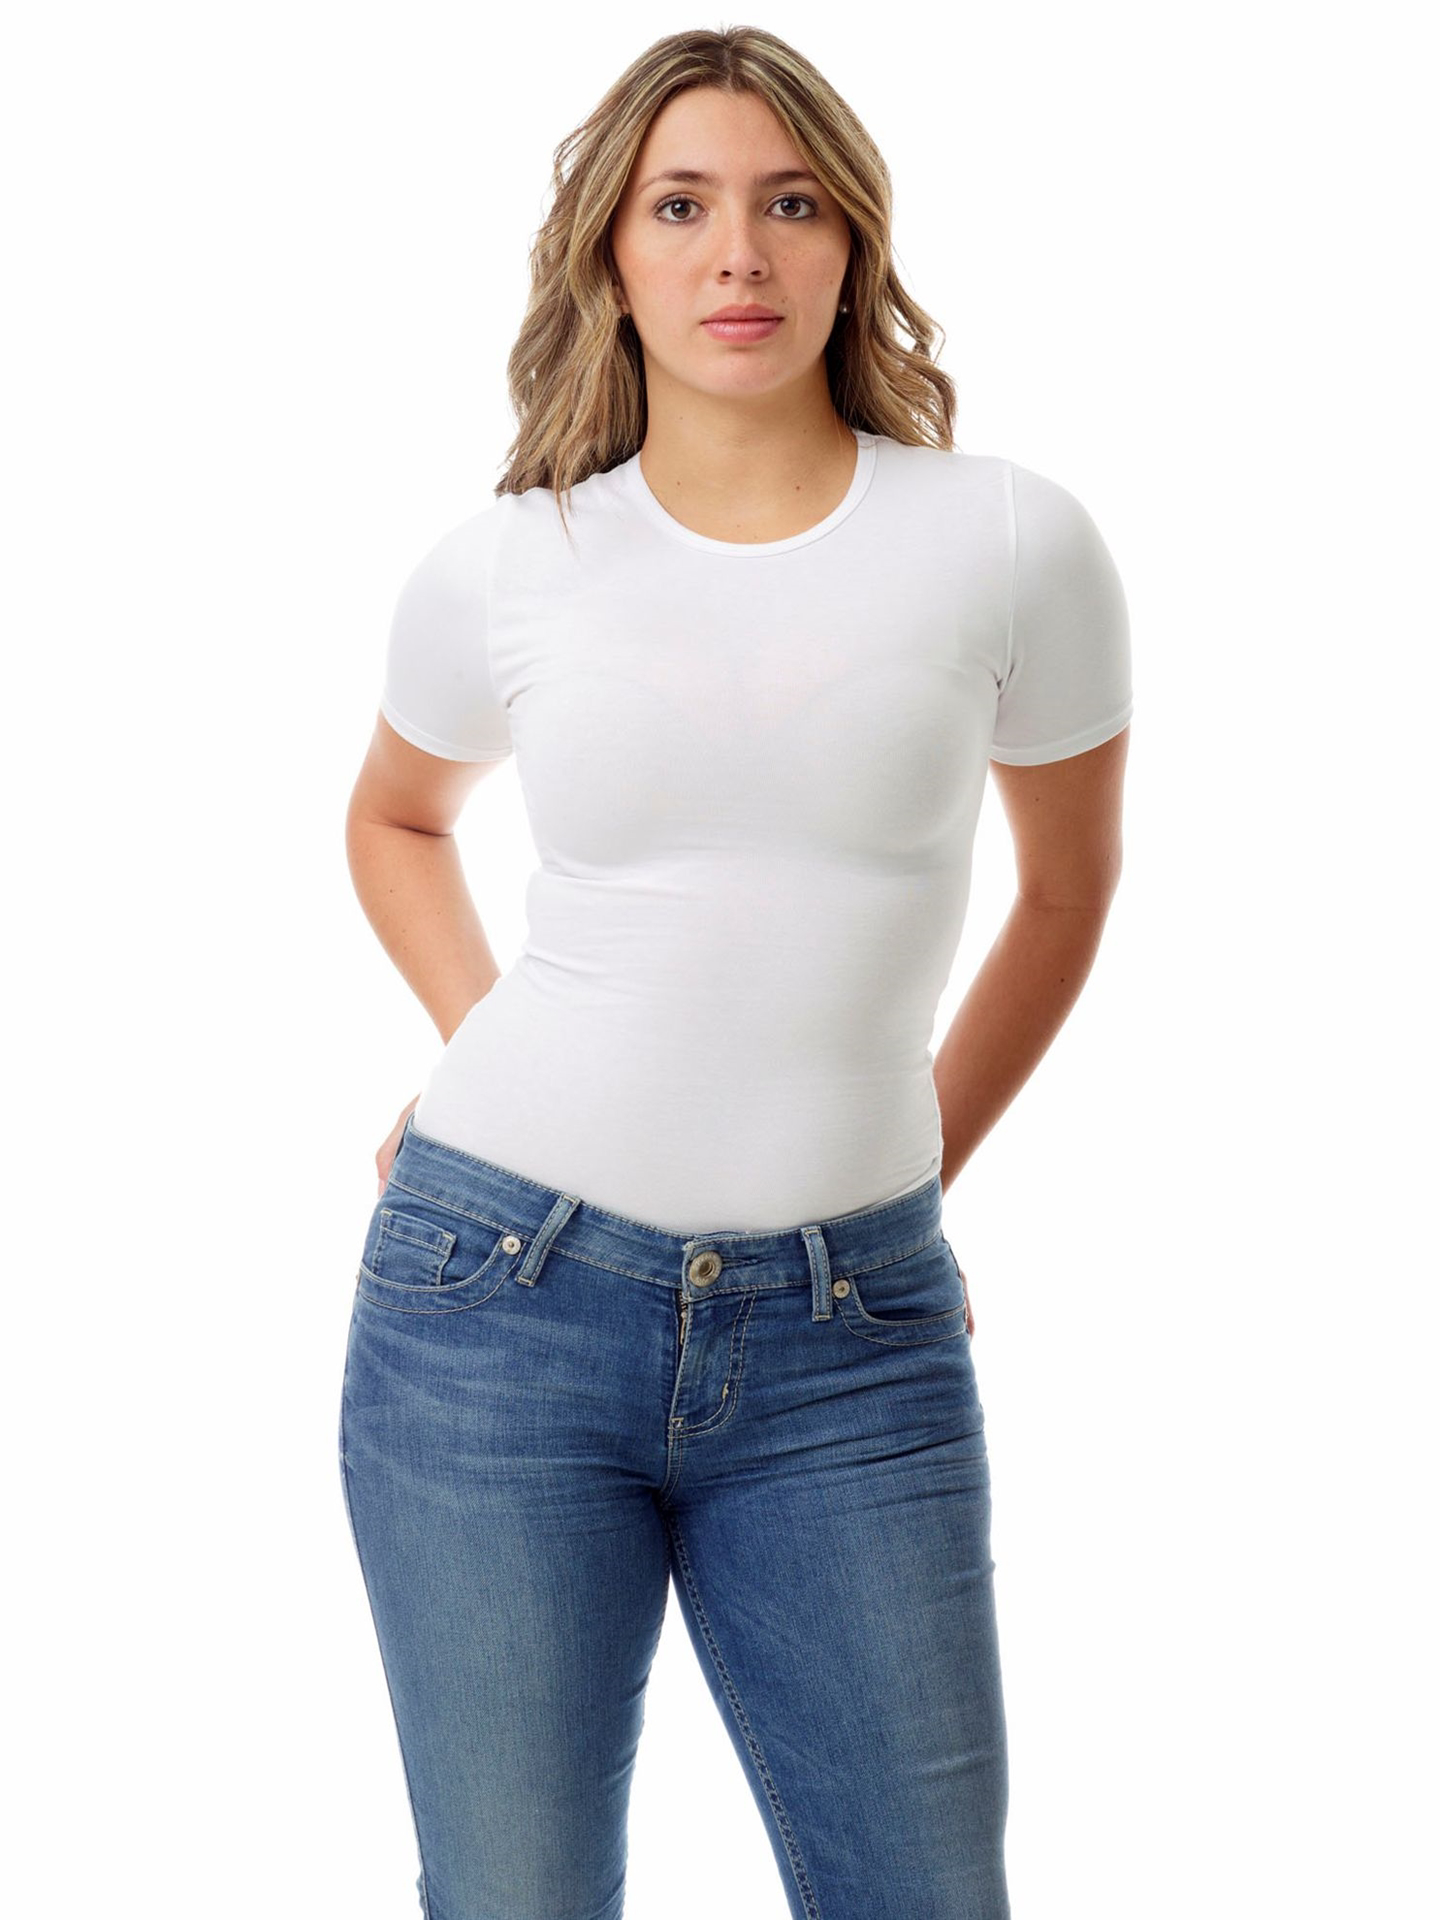 Women's Ultra Light Cotton Spandex Compression Crew Neck T-shirt. Men  Compression Shirts, Girdles, Chest Binders, Hernia Garments